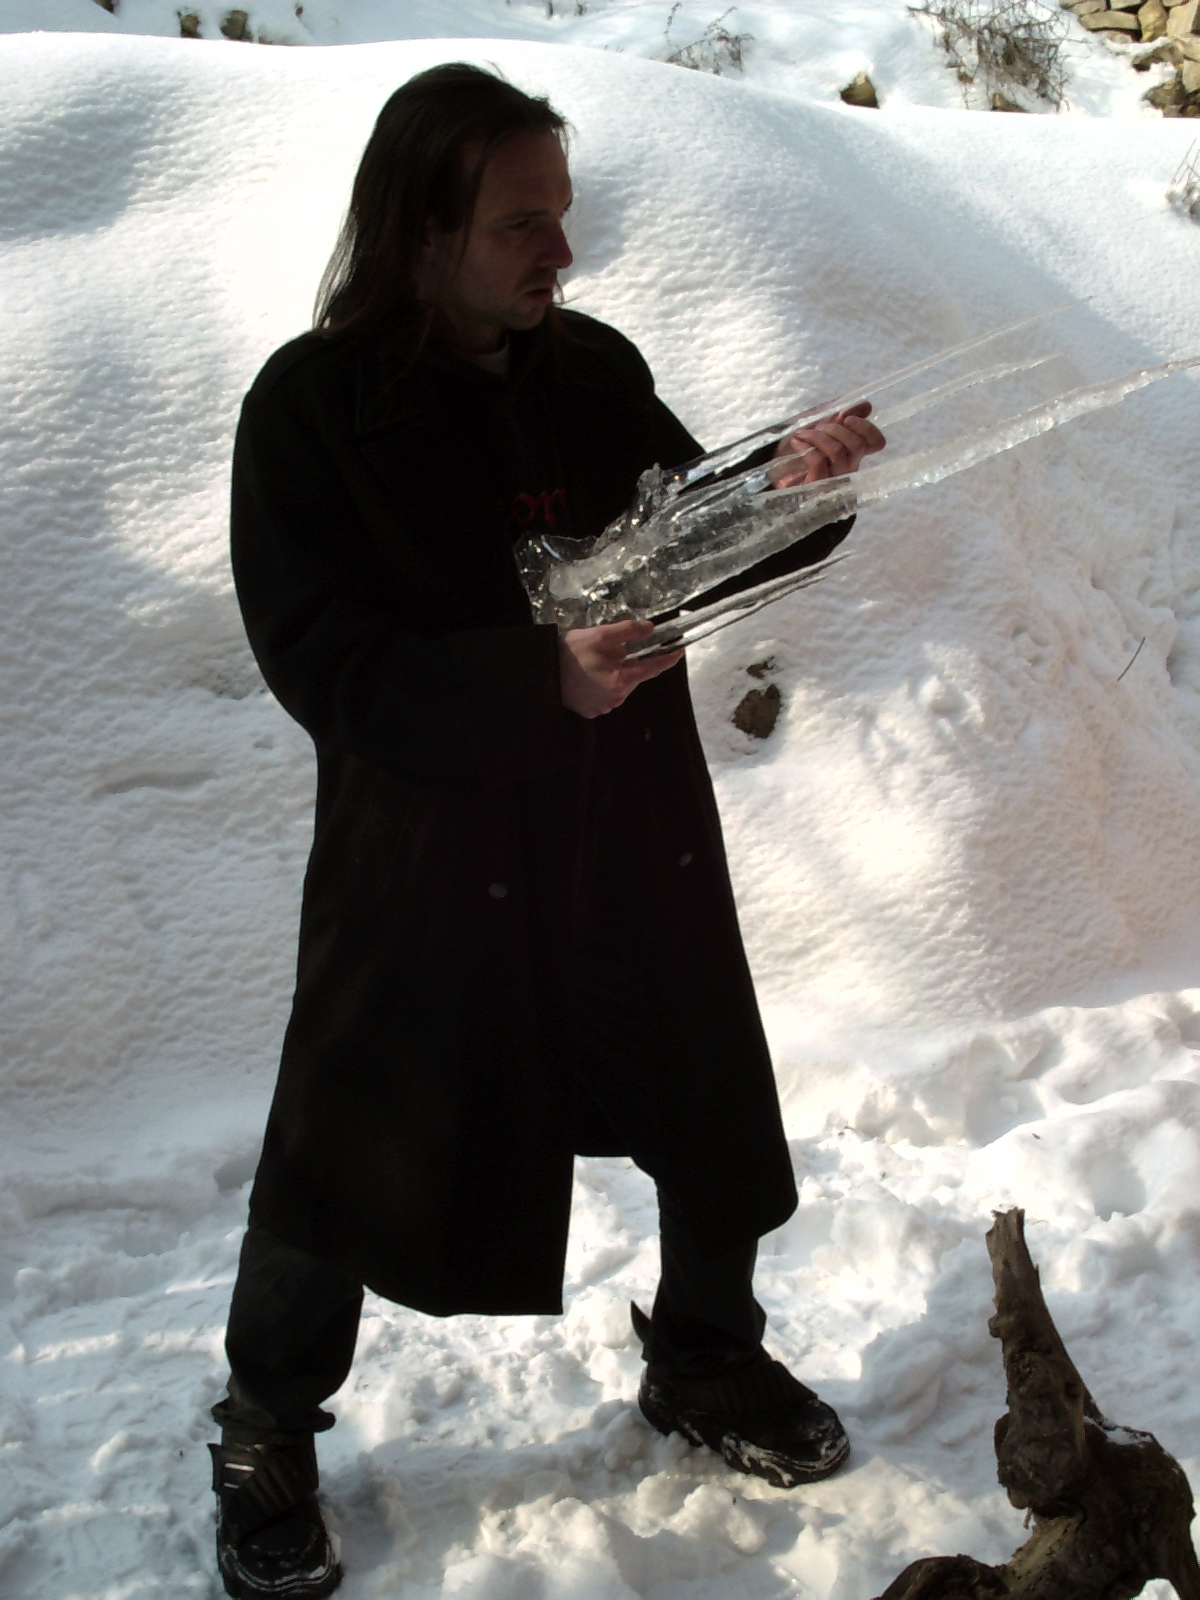 Attila Csihar original photo shoot for SUNN O))) "White2" album, 2003